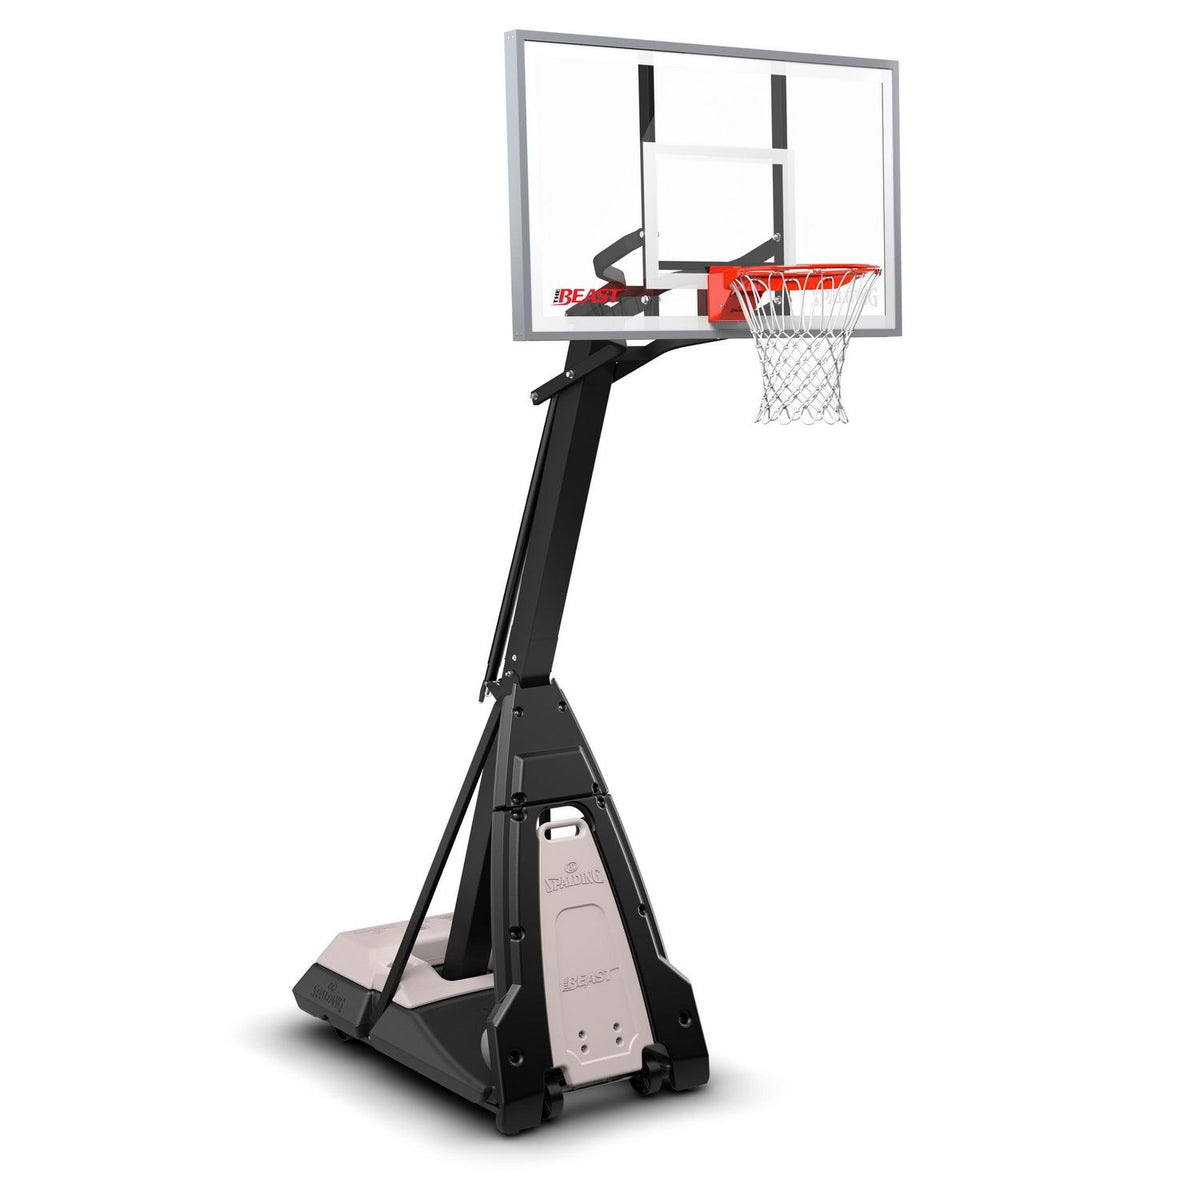 Basketball set, adjustable - 80-160 cm., 6902002088182